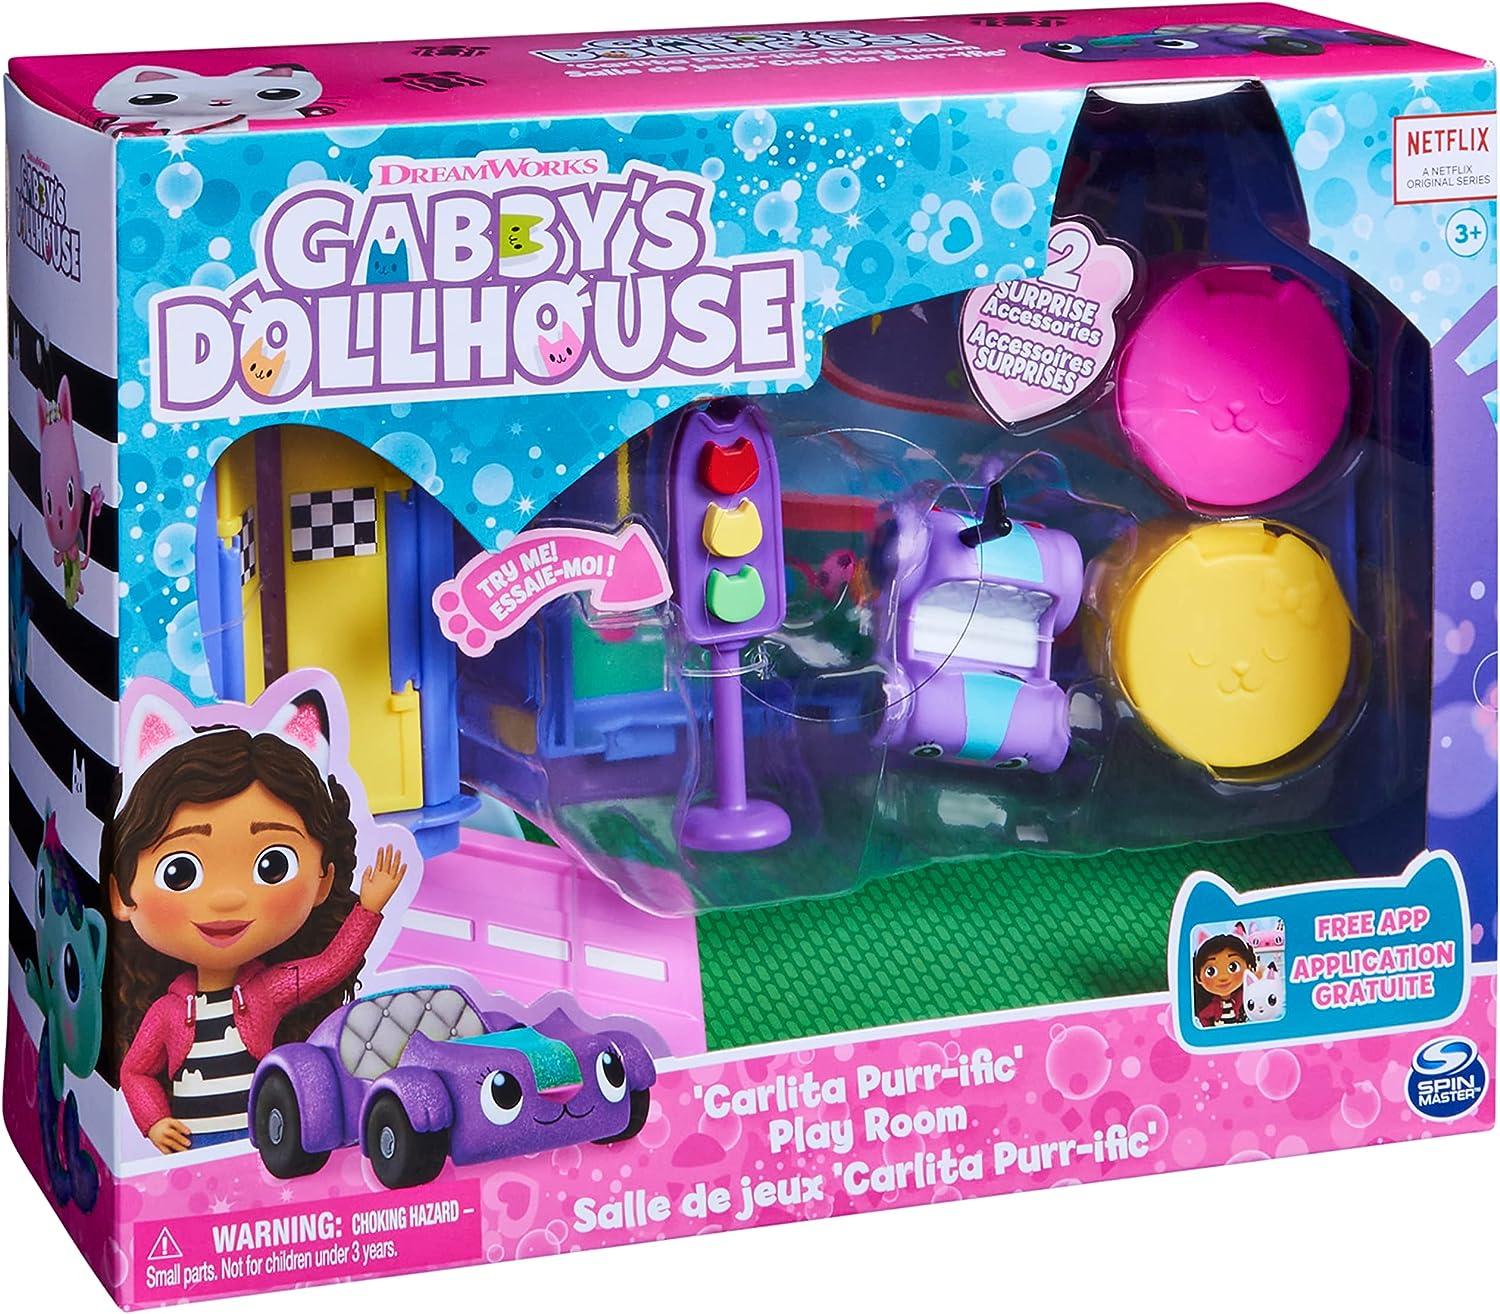 Gabby?s Dollhouse CARLITA PURR-IFIC Play Room